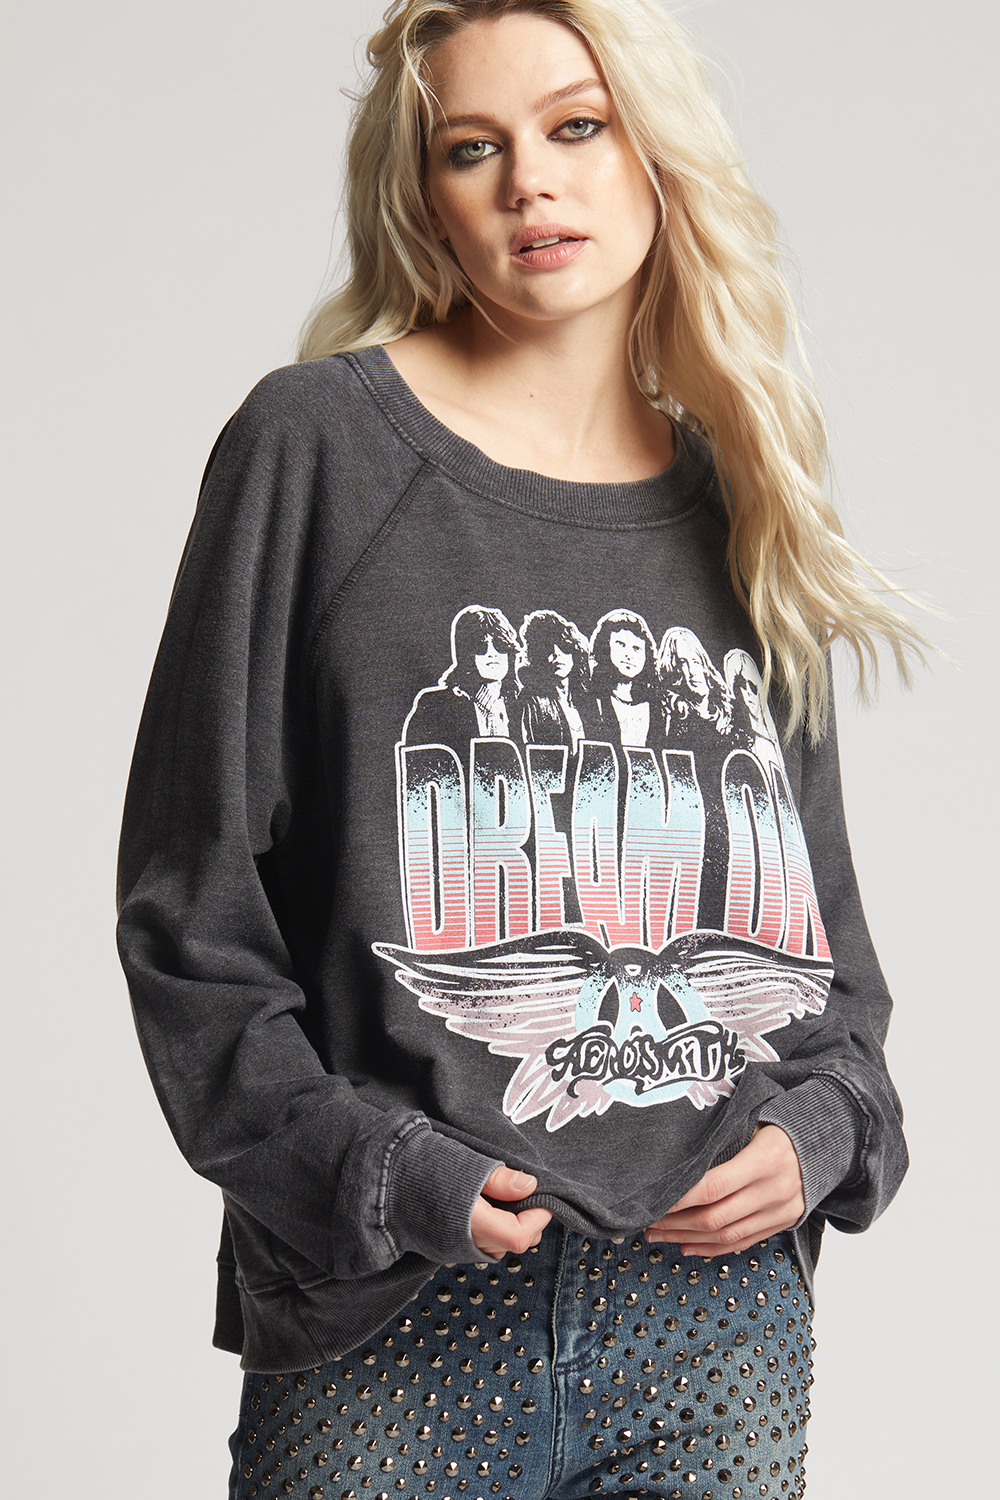 Aerosmith Dream On Sweatshirt